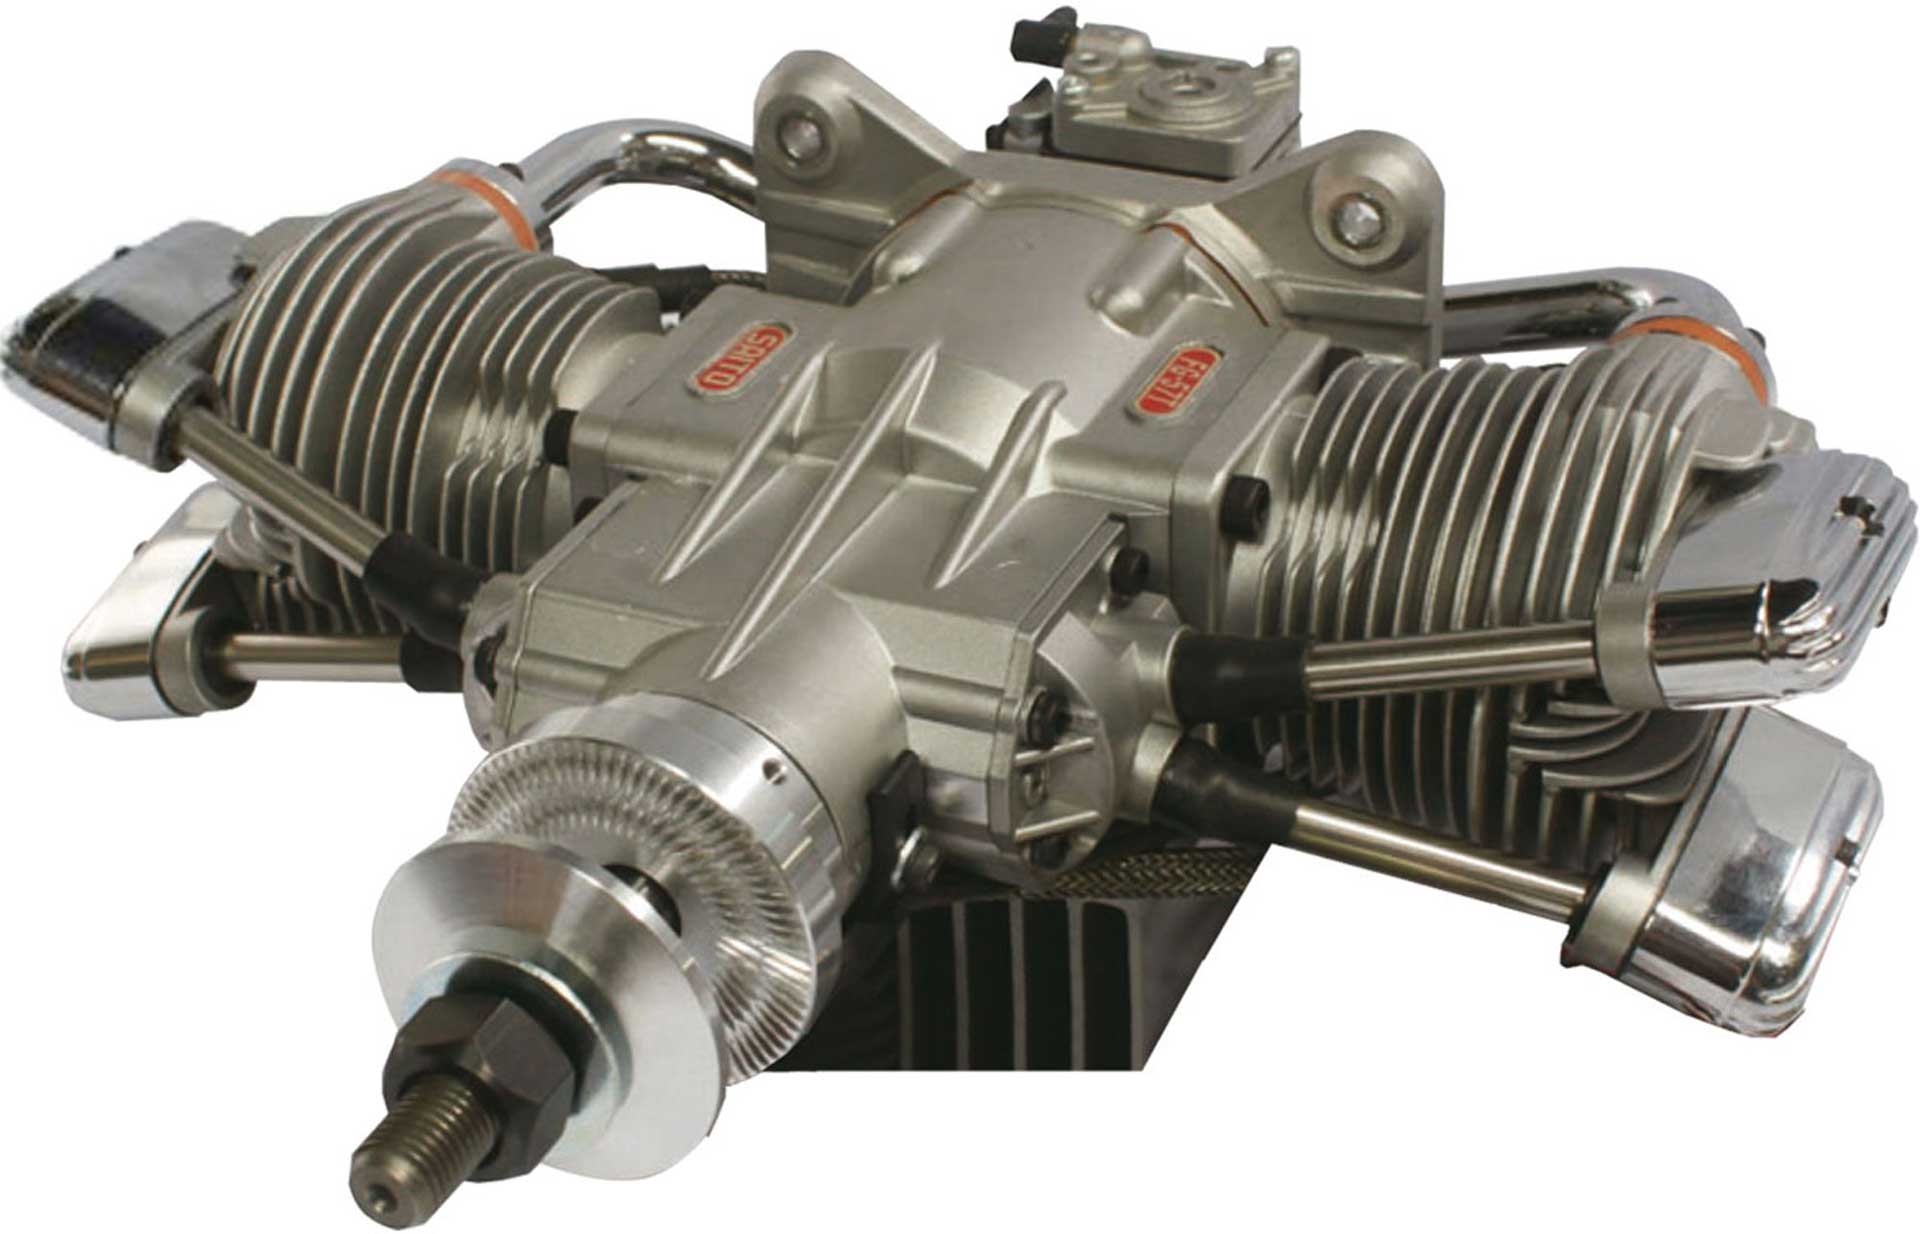 SAITO FG-57TS "ACRO" Boxer gasoline engine 2-cylinder